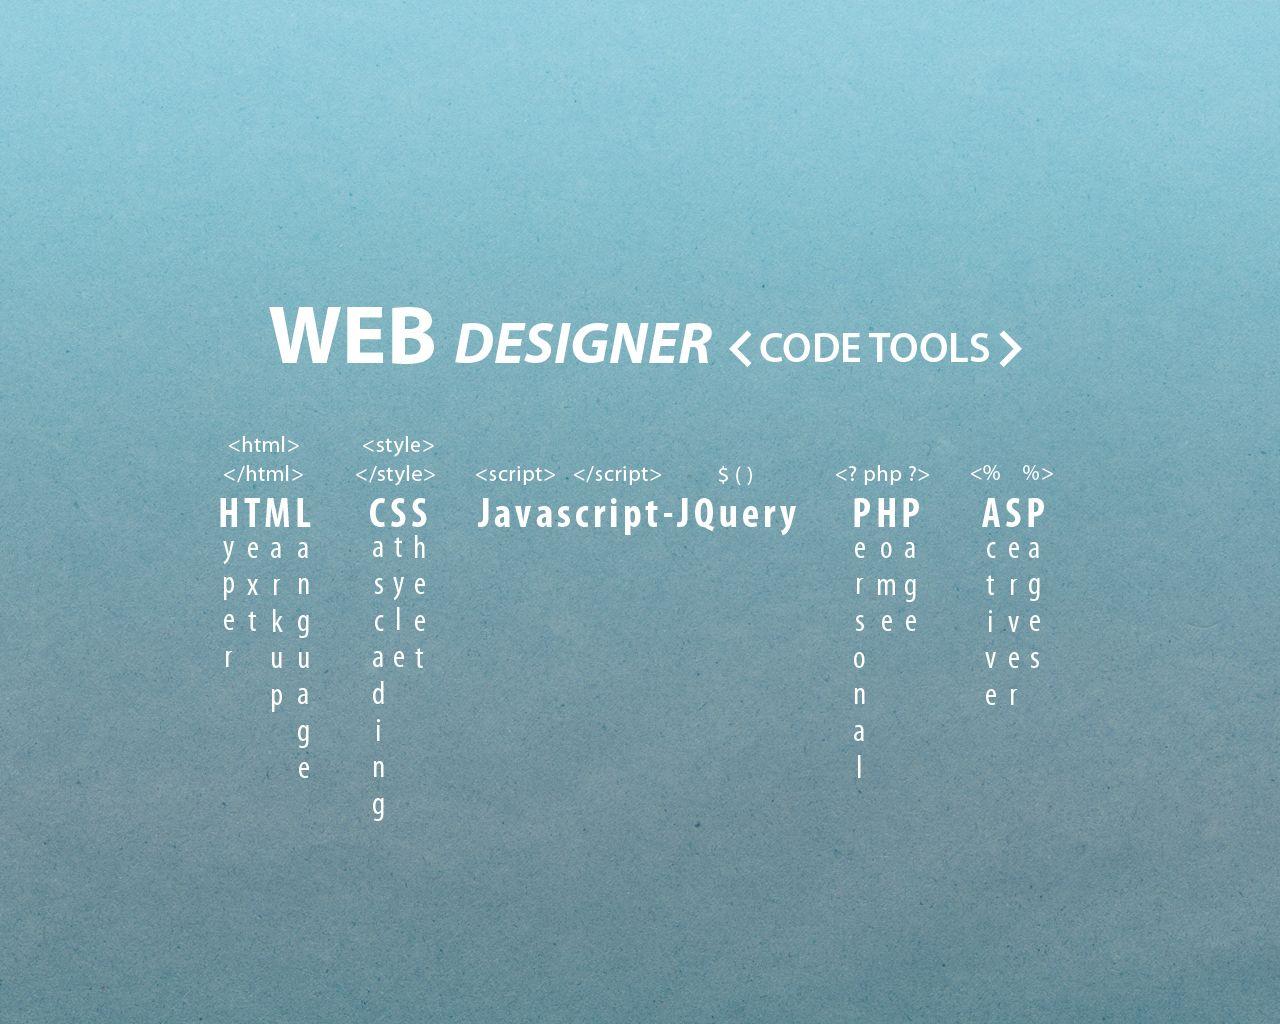 Wallpaper ideales para diseñadores web